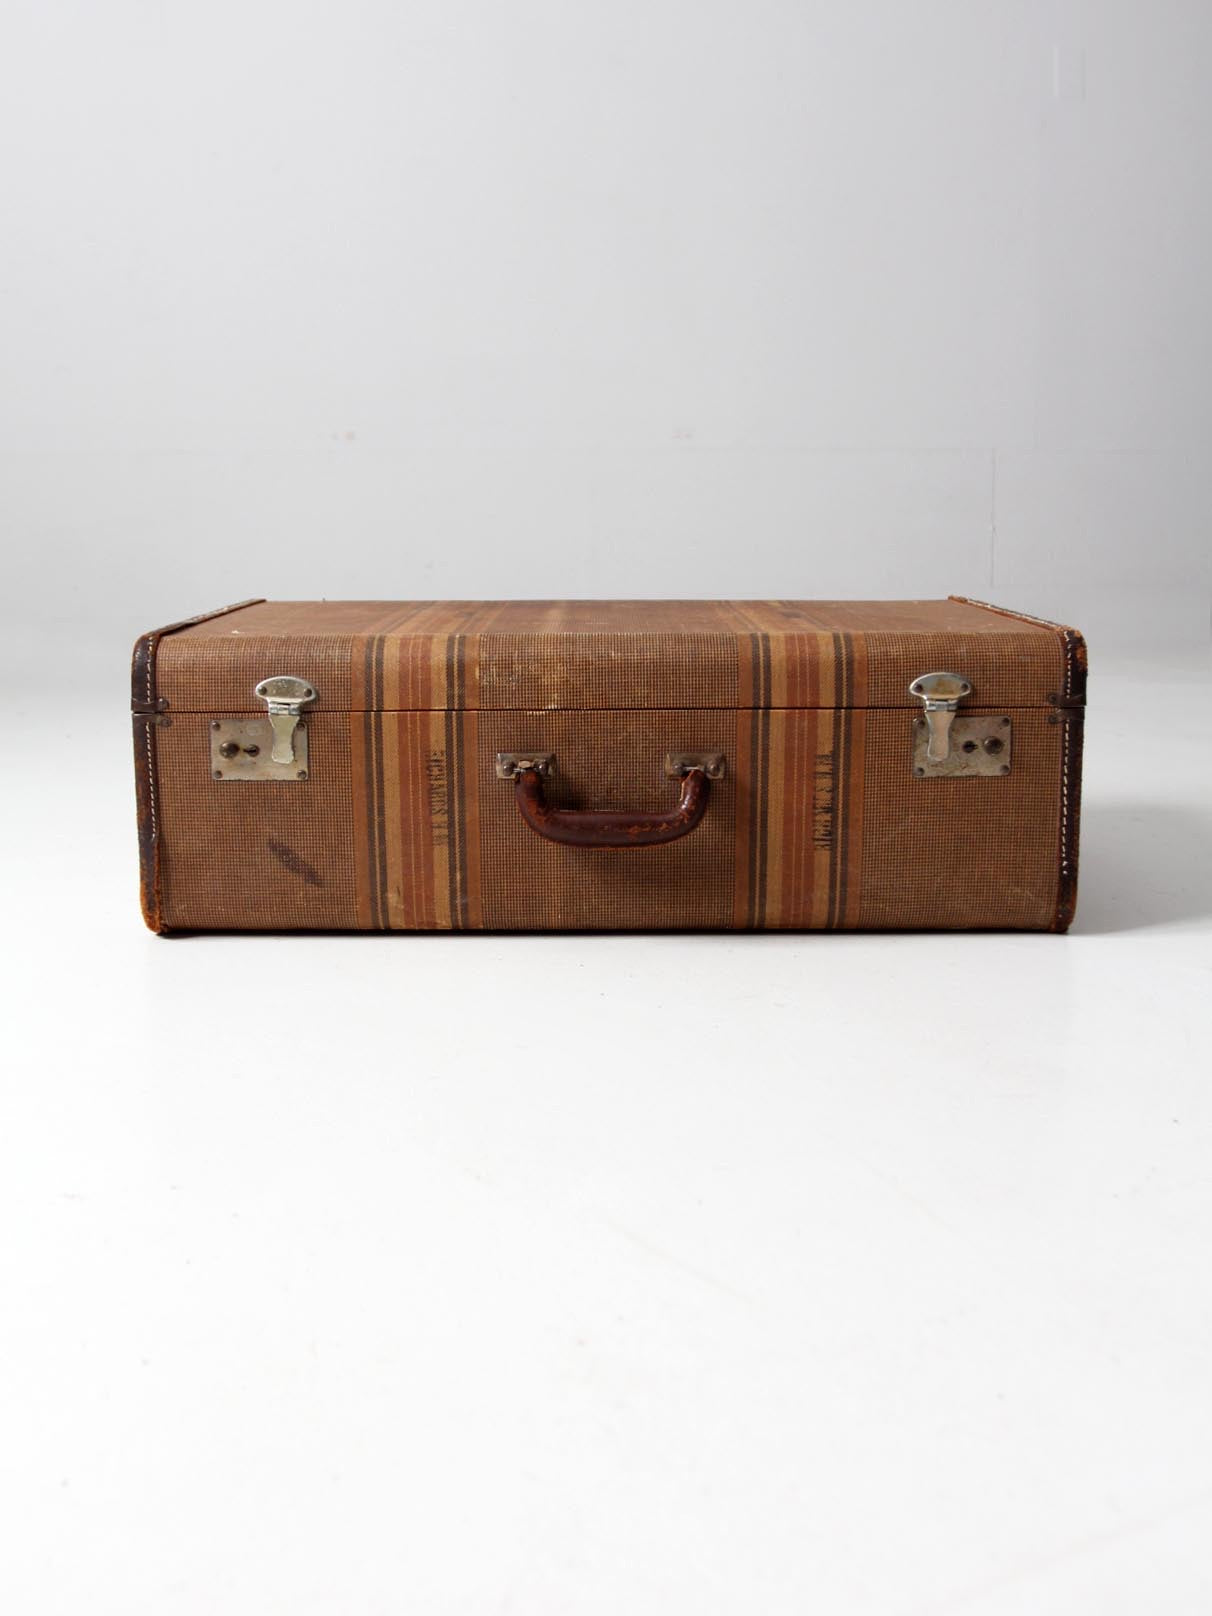 Antique Louis Vuitton suitcase red/white stripe - Pinth Vintage Luggage